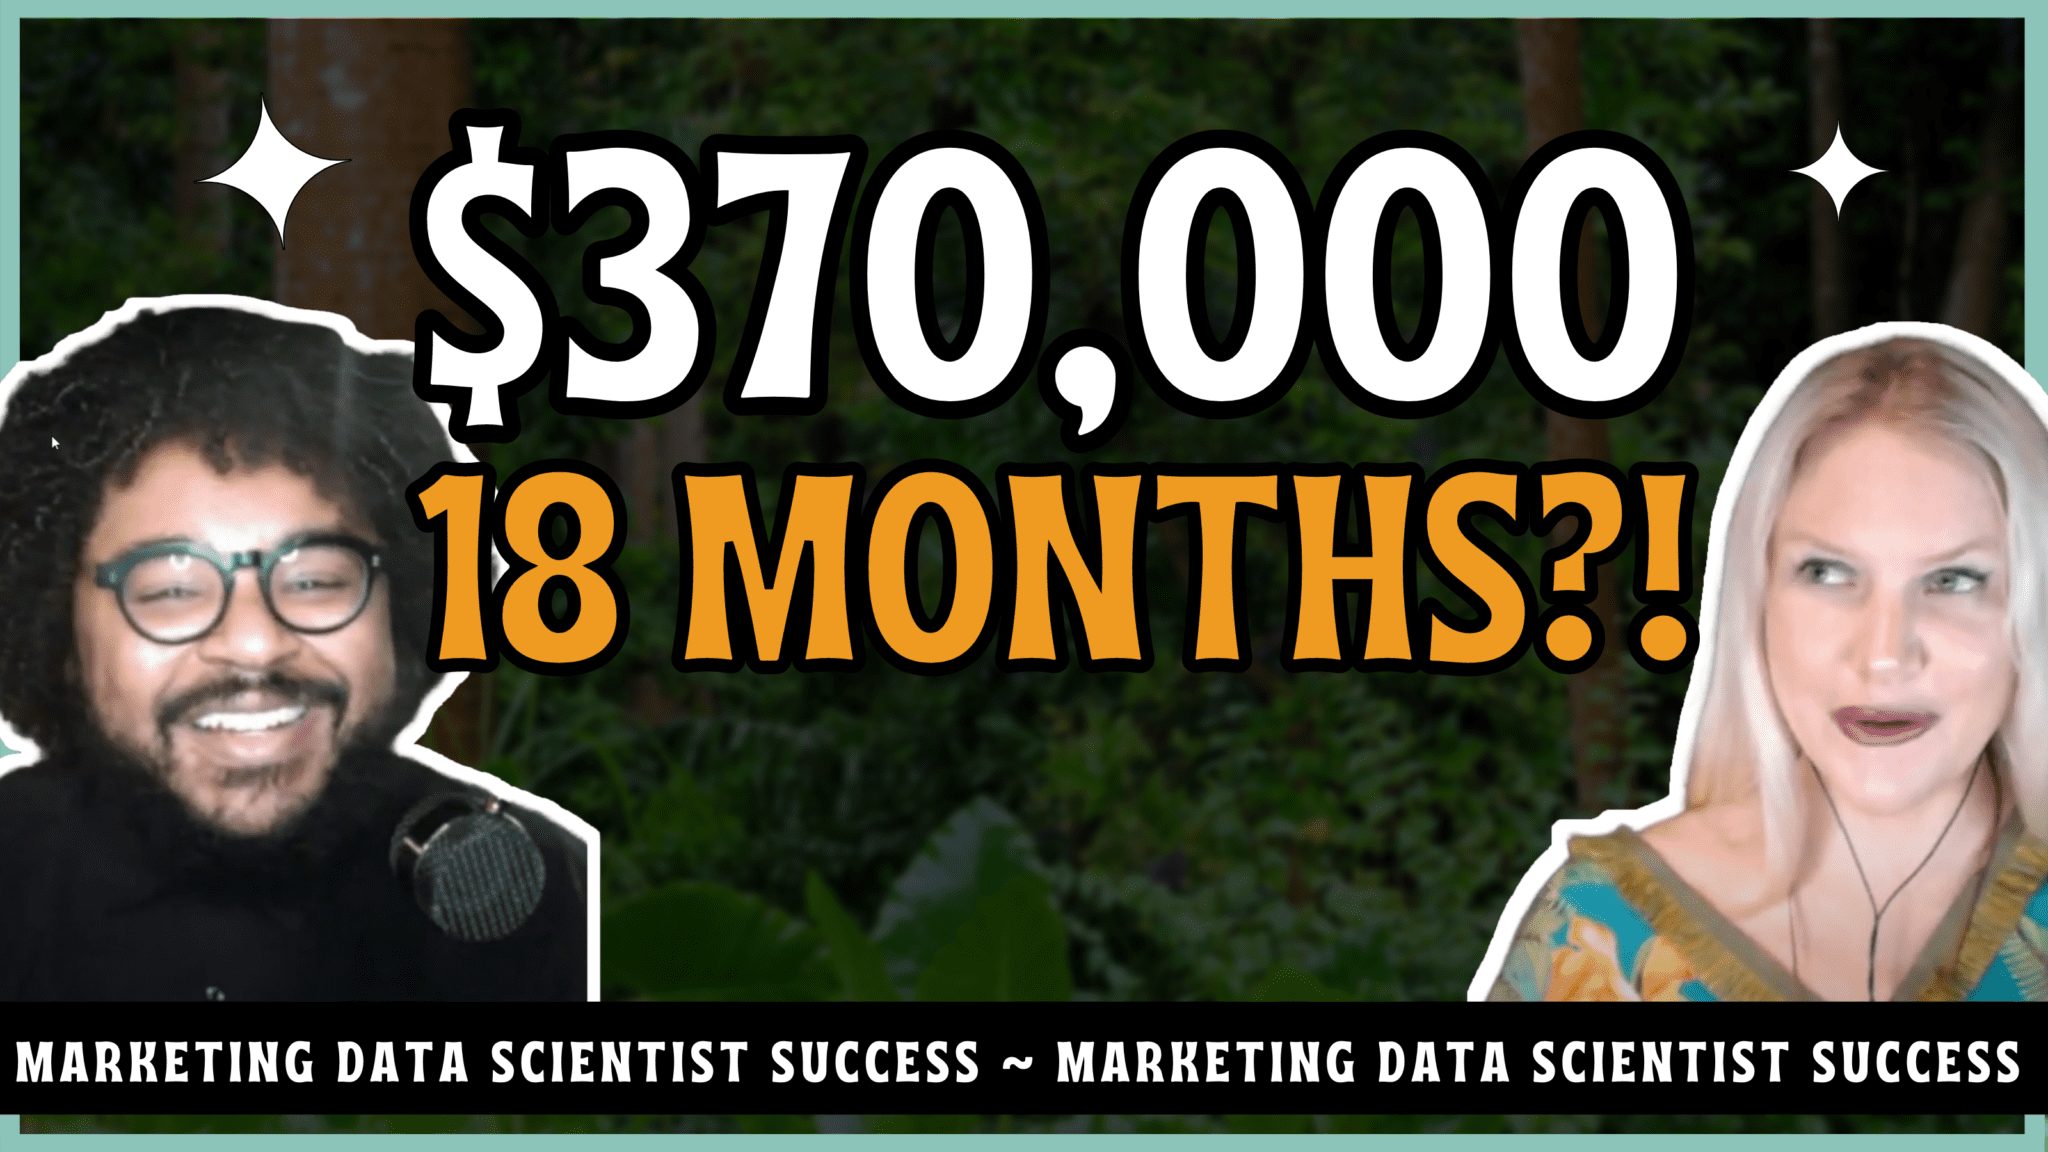 Marketing data scientist success story